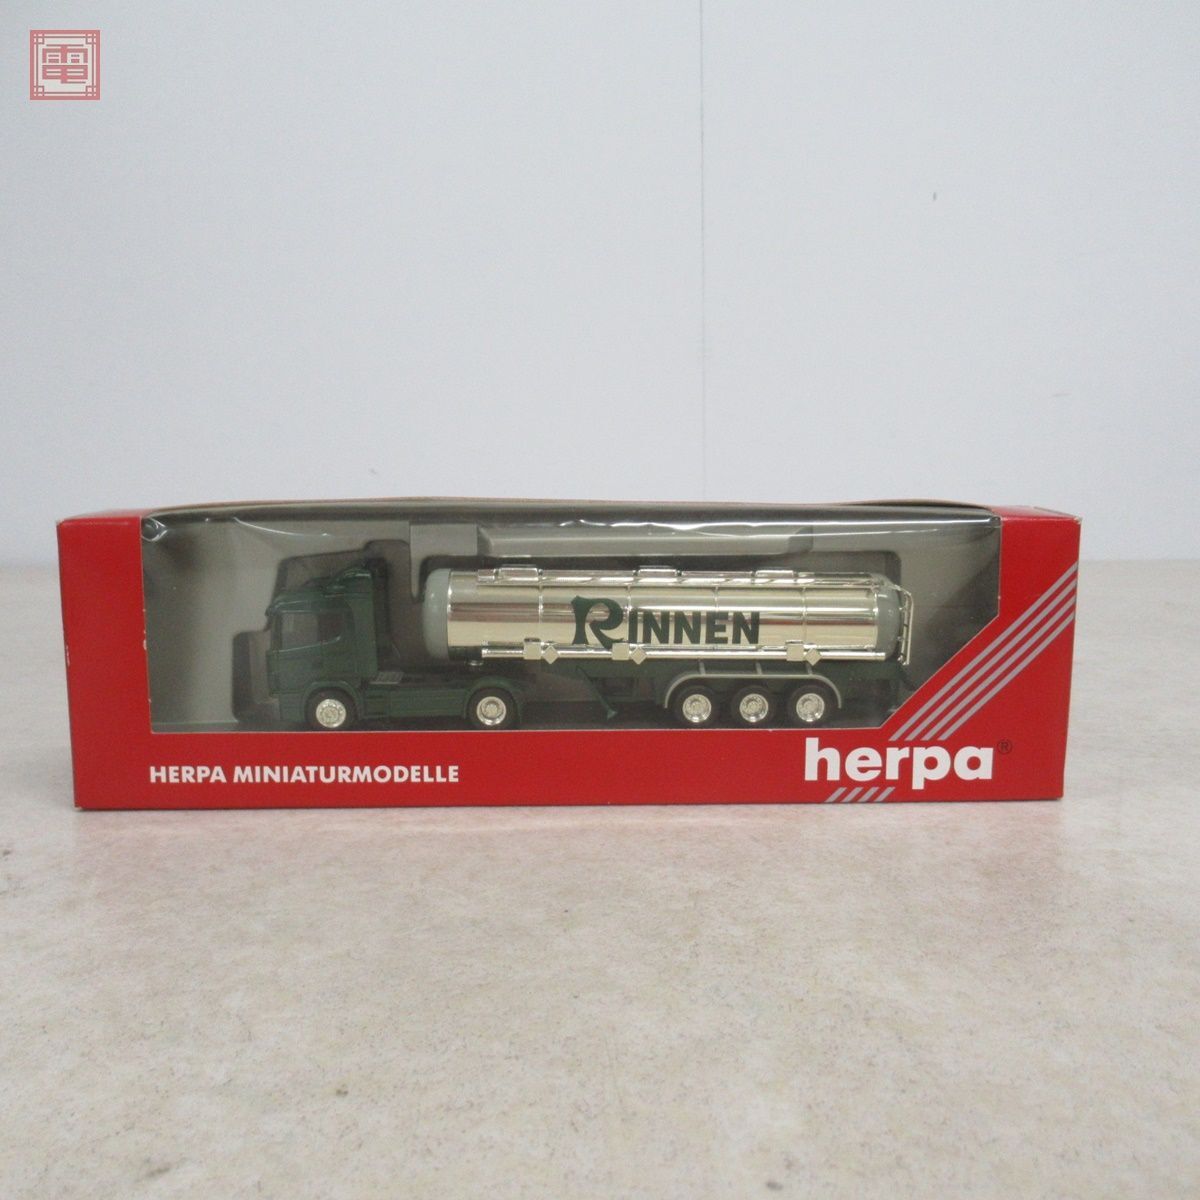  Herpa 1/87 мобильный кран / полуприцеп /BMW/ Mini Cooper / Peugeot 406 и т.п. совместно 22 шт. комплект herpa[20